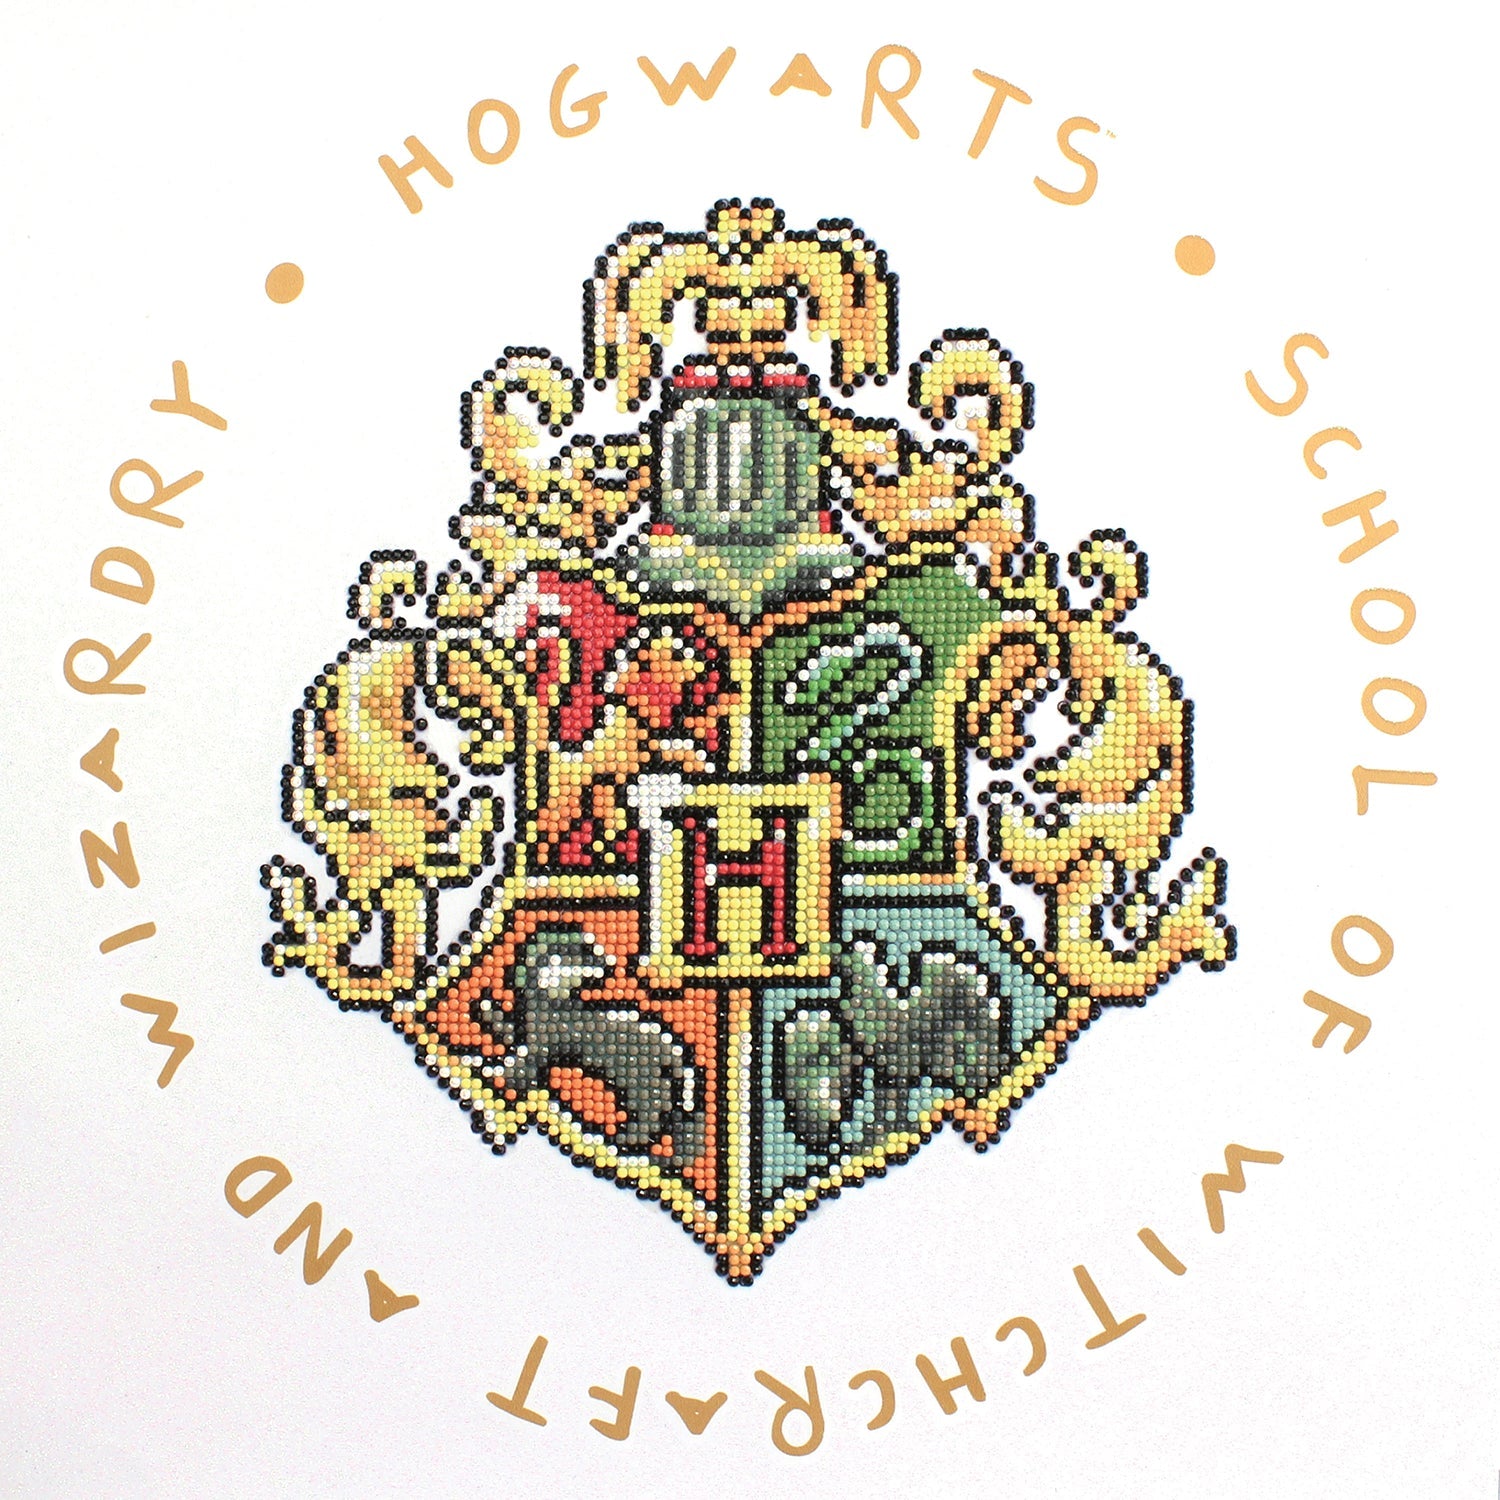 Camelot® Dots Harry Potter Dotzies Craft Kit Diamond Painting Kit